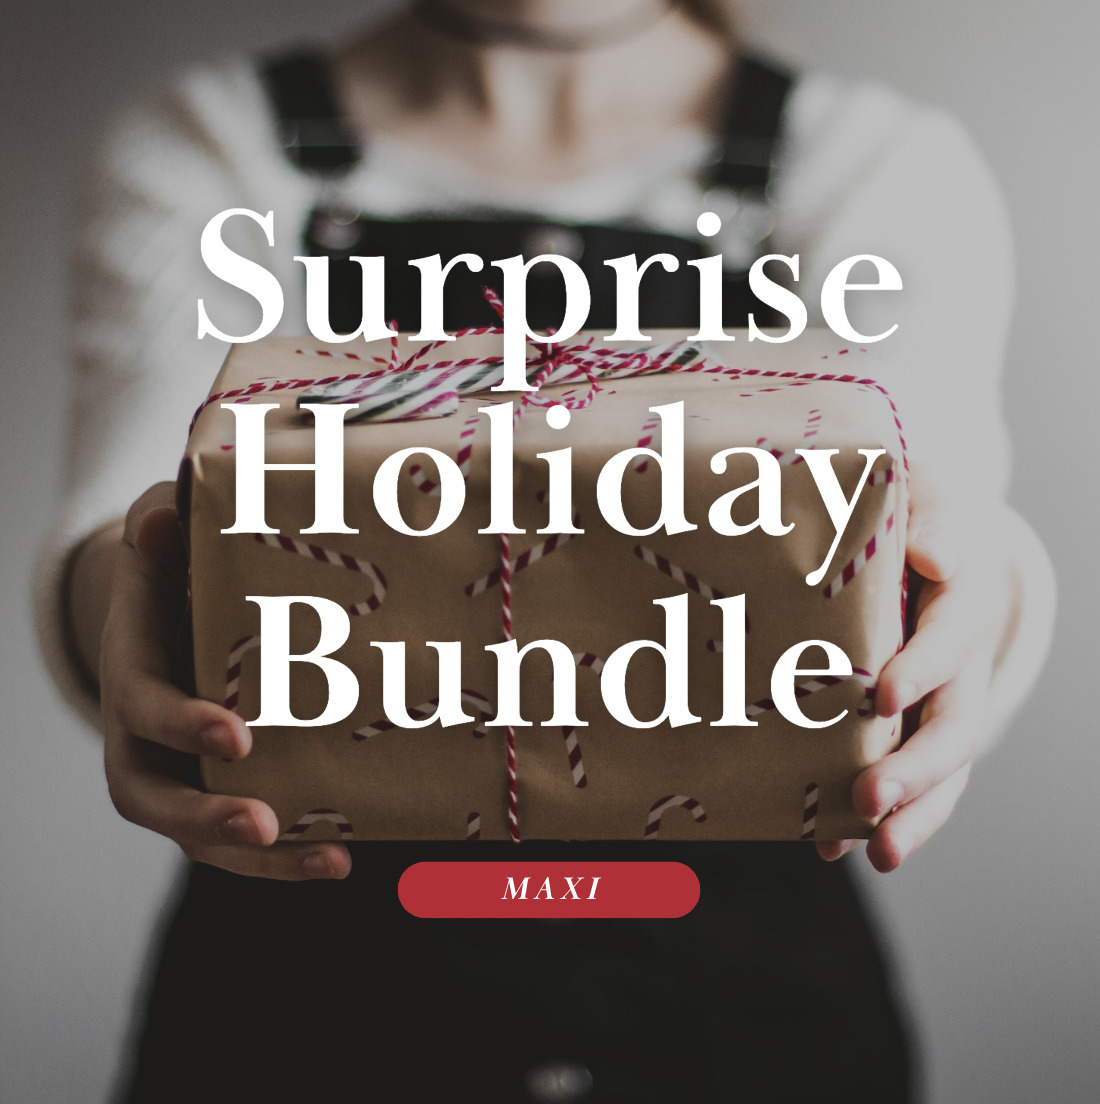 Surprise Holiday Bundle - MAXI 01